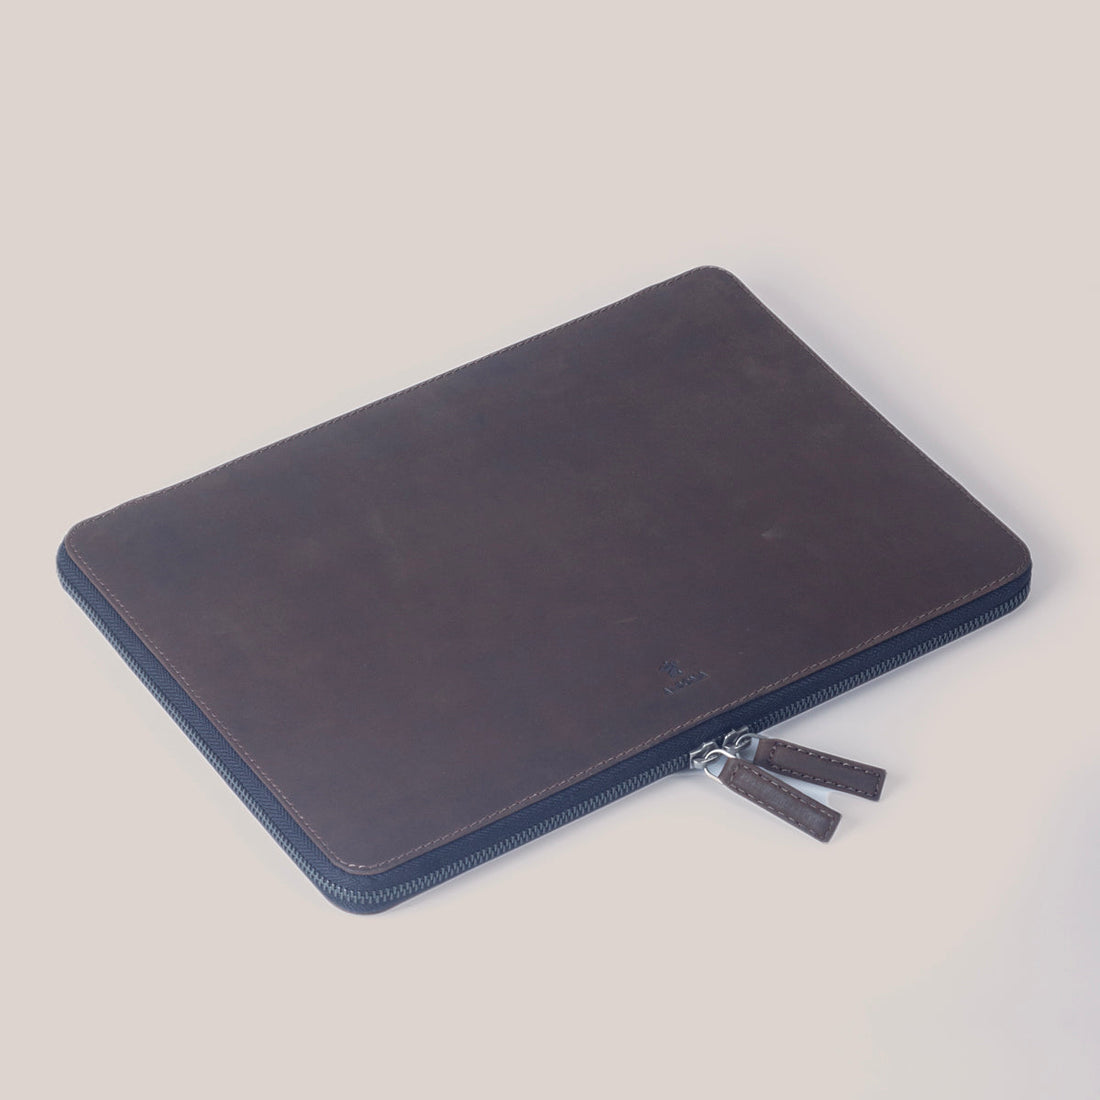 DELL XPS 17 Zippered Laptop Case - Onyx Black